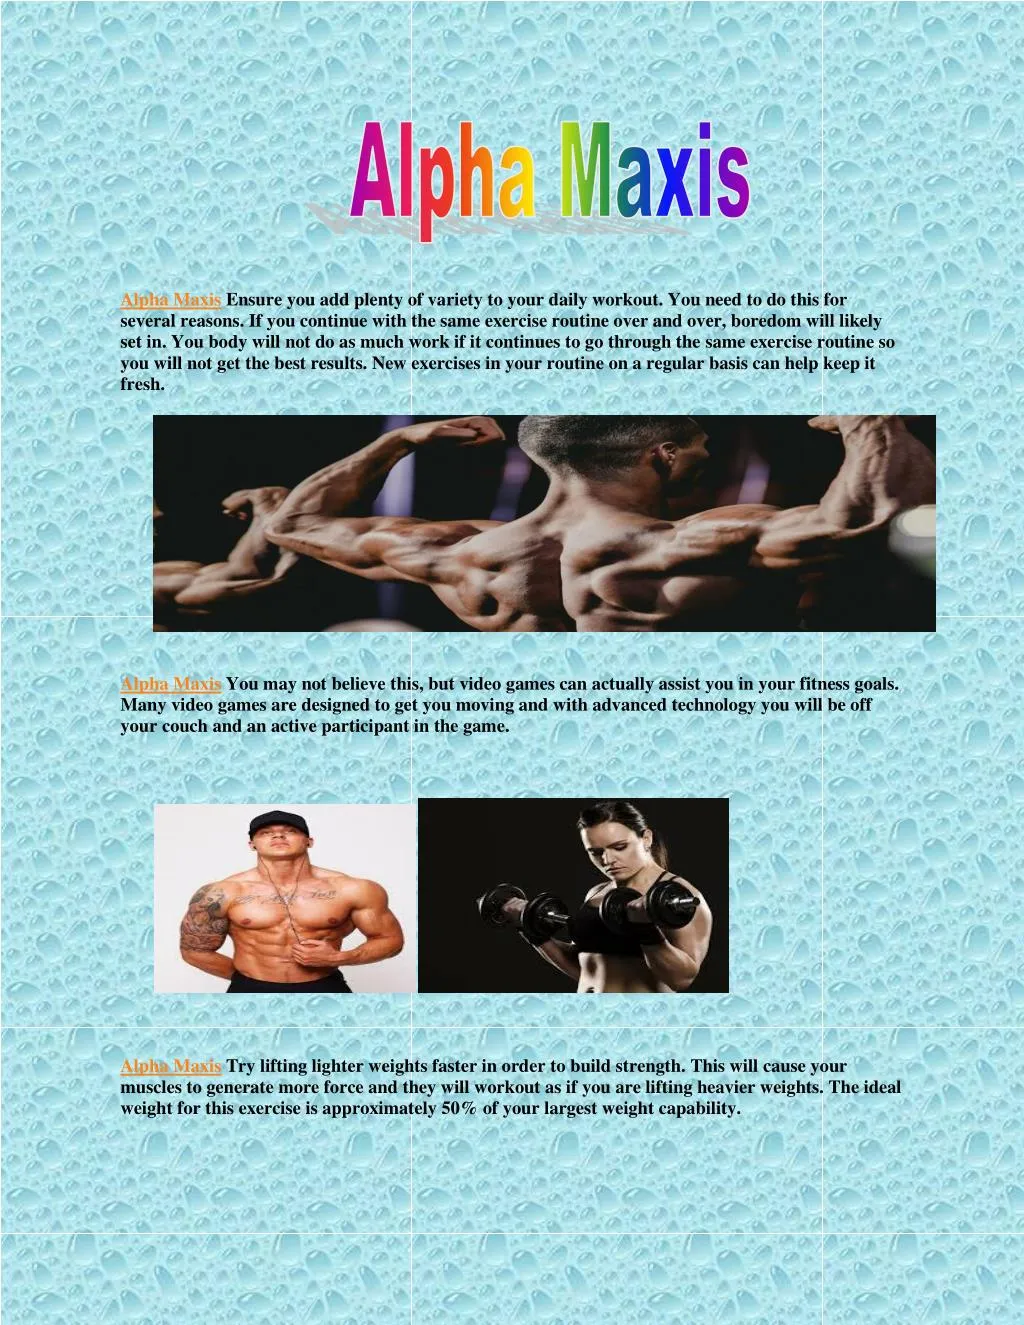 alpha maxis ensure you add plenty of variety